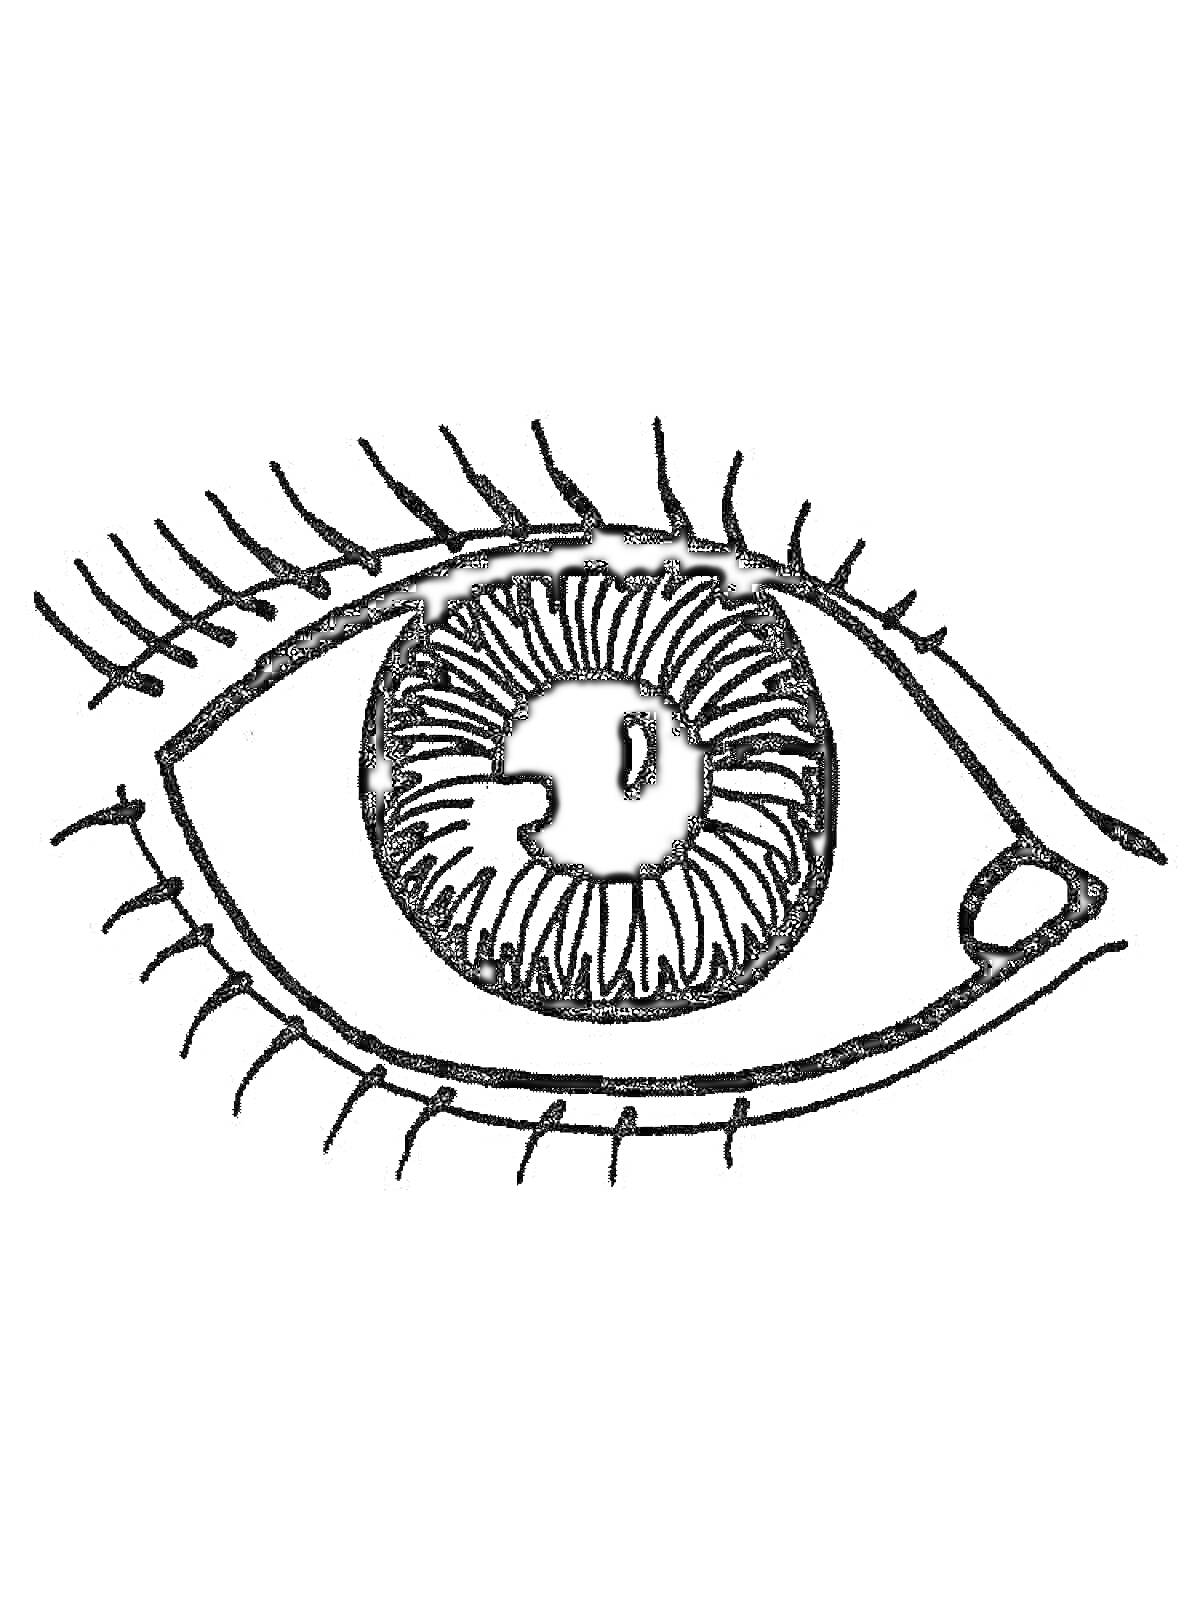 Рисунок глаза с ресницами и зрачком